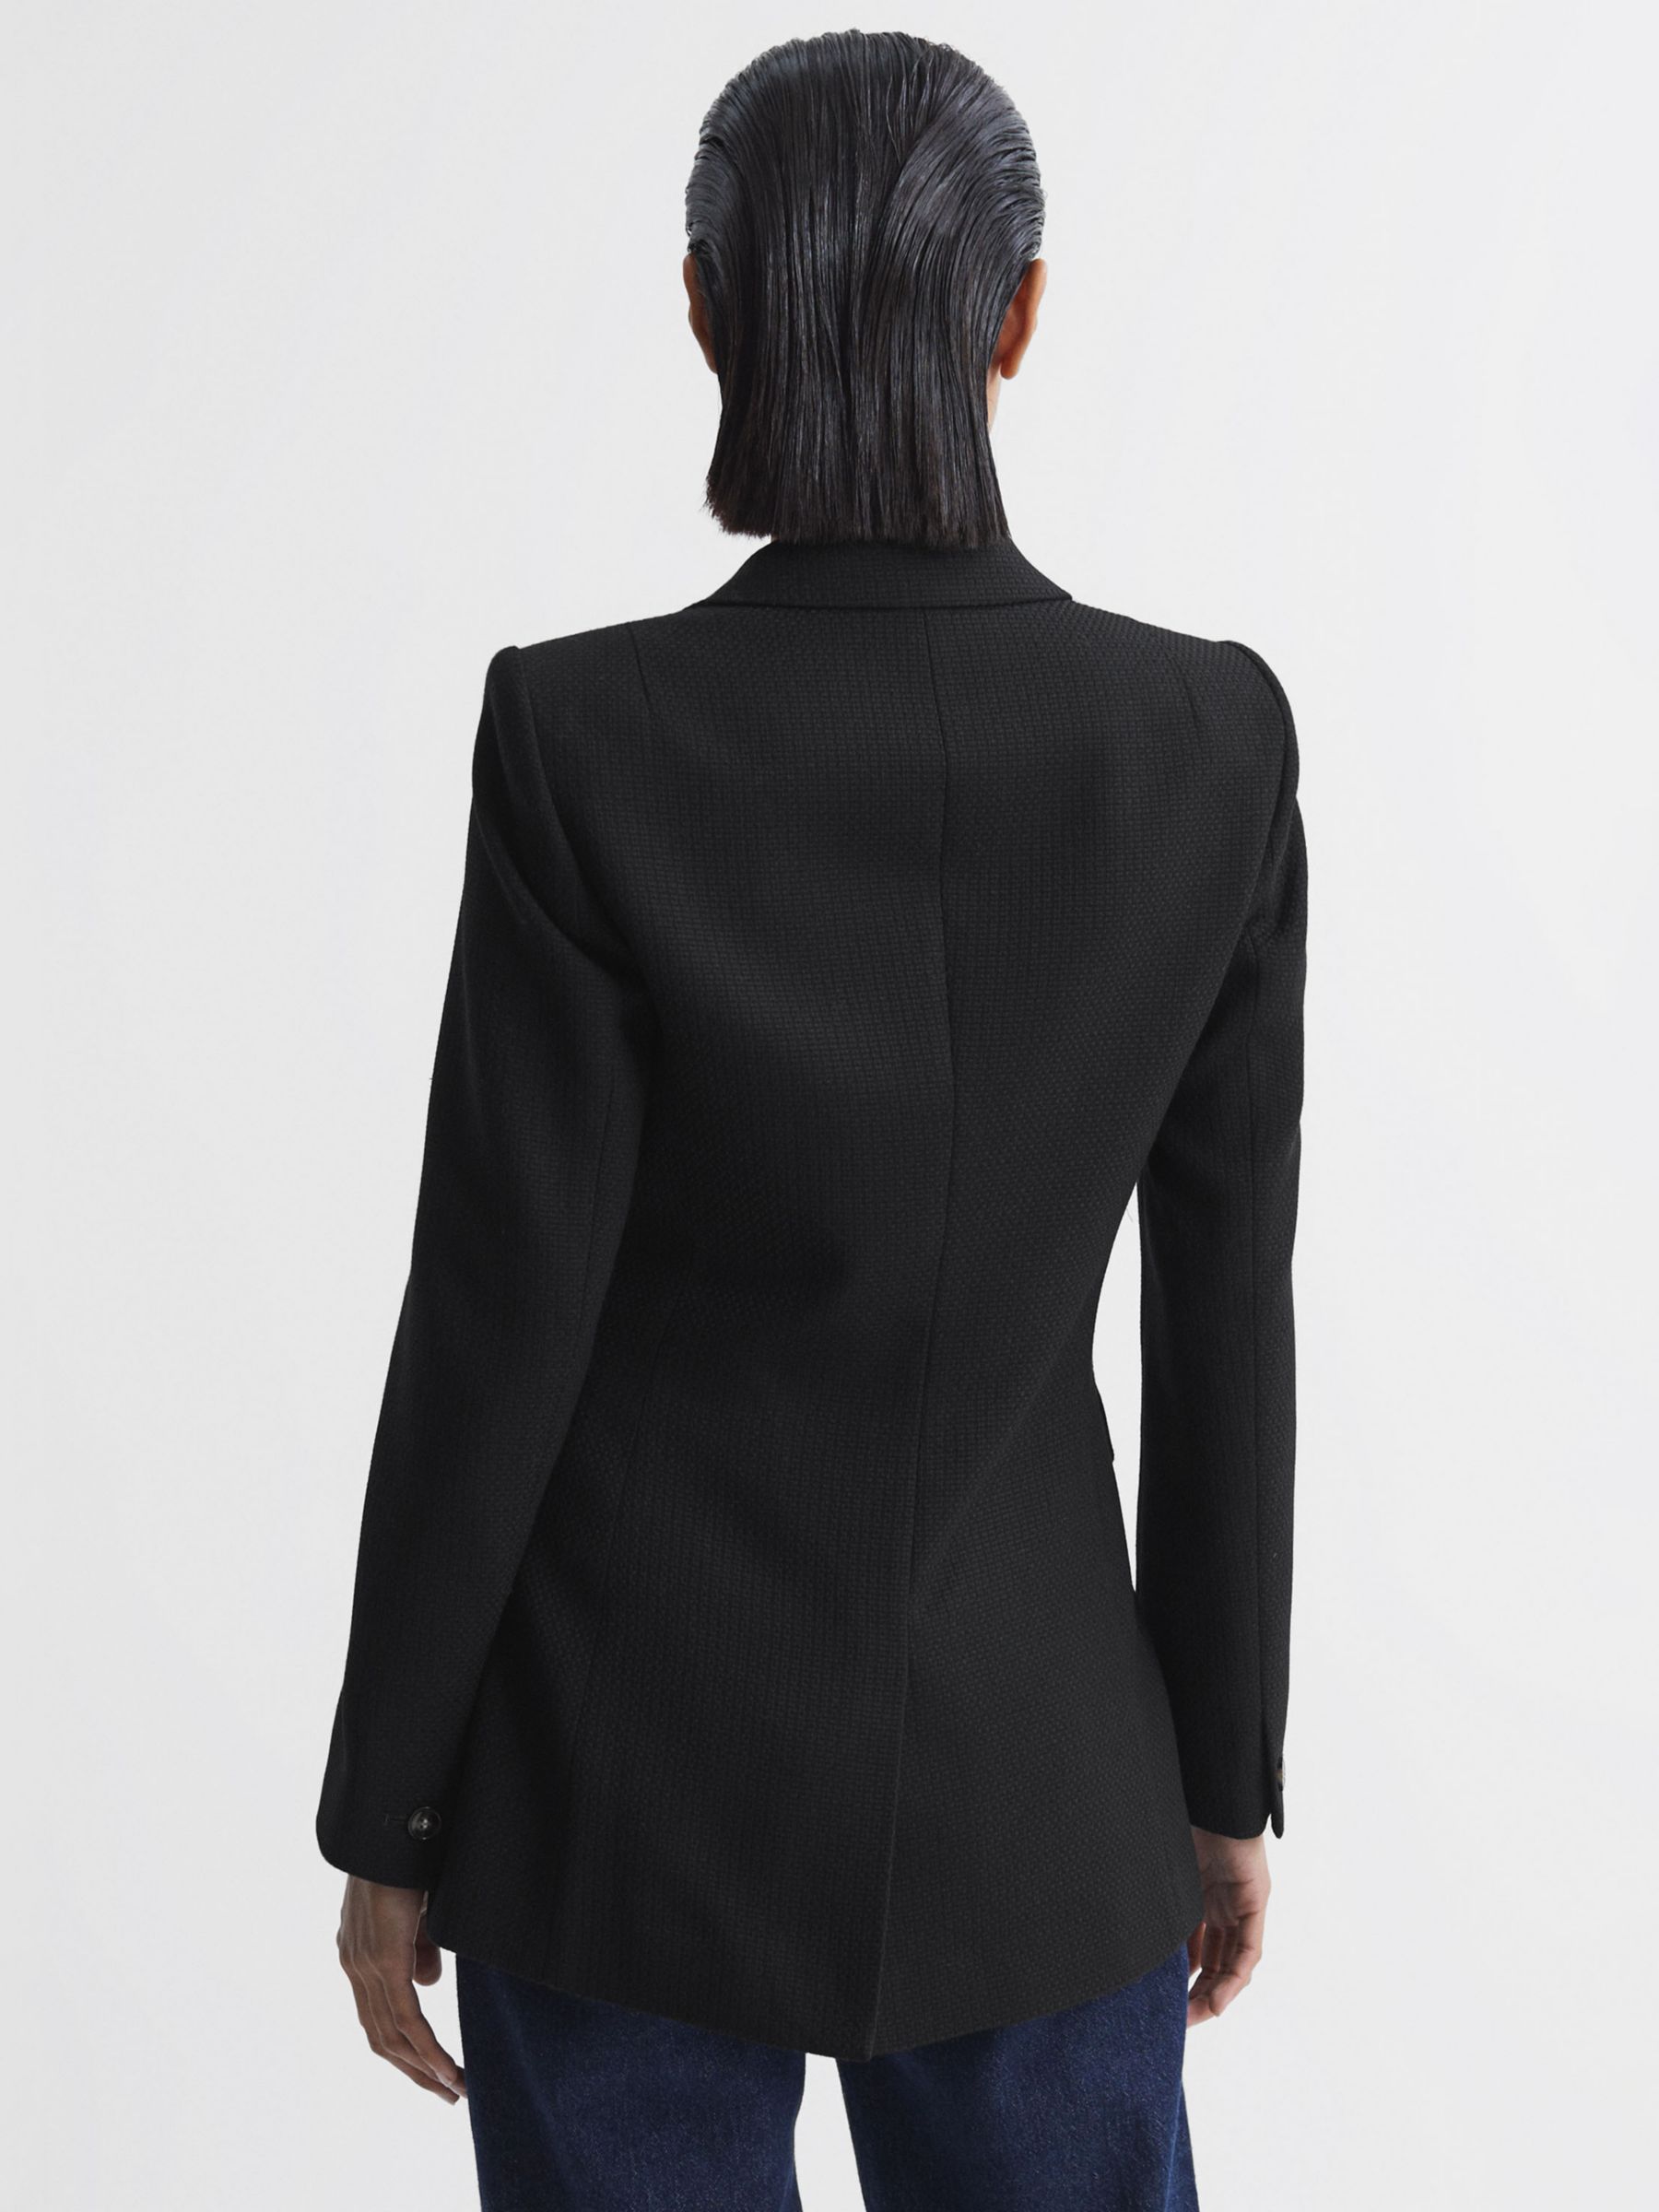 Buy Reiss Lana Textured Wool Blend Double Breasted Blazer, Black Online at johnlewis.com